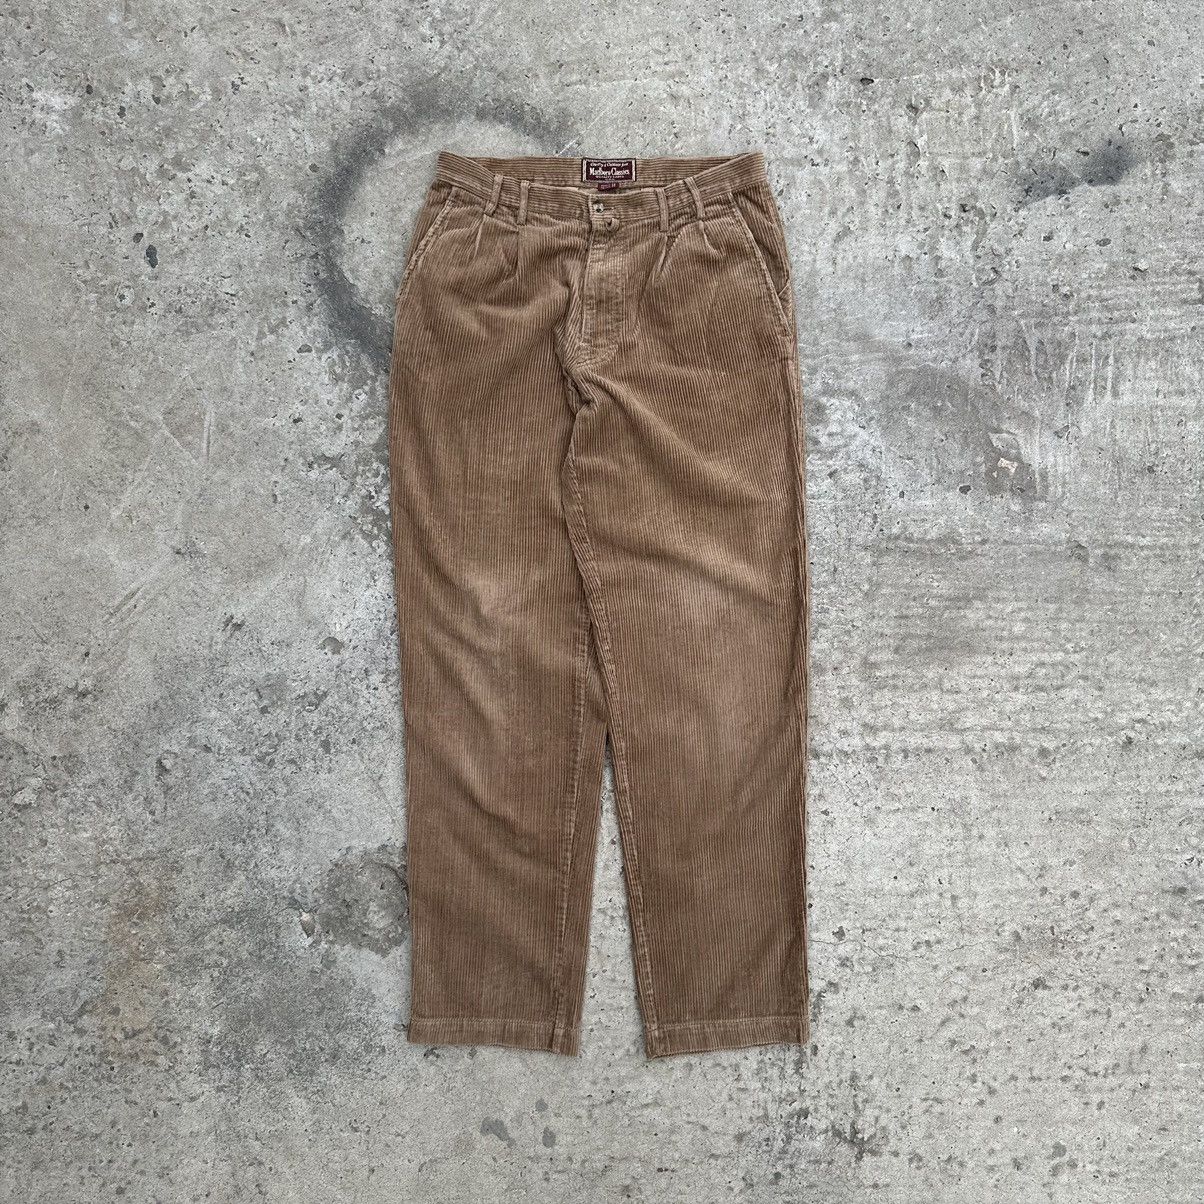 Vintage Vintage Corduroy Pants Marlboro Classic velveteen 90s Size US 32 / EU 48 - 3 Thumbnail